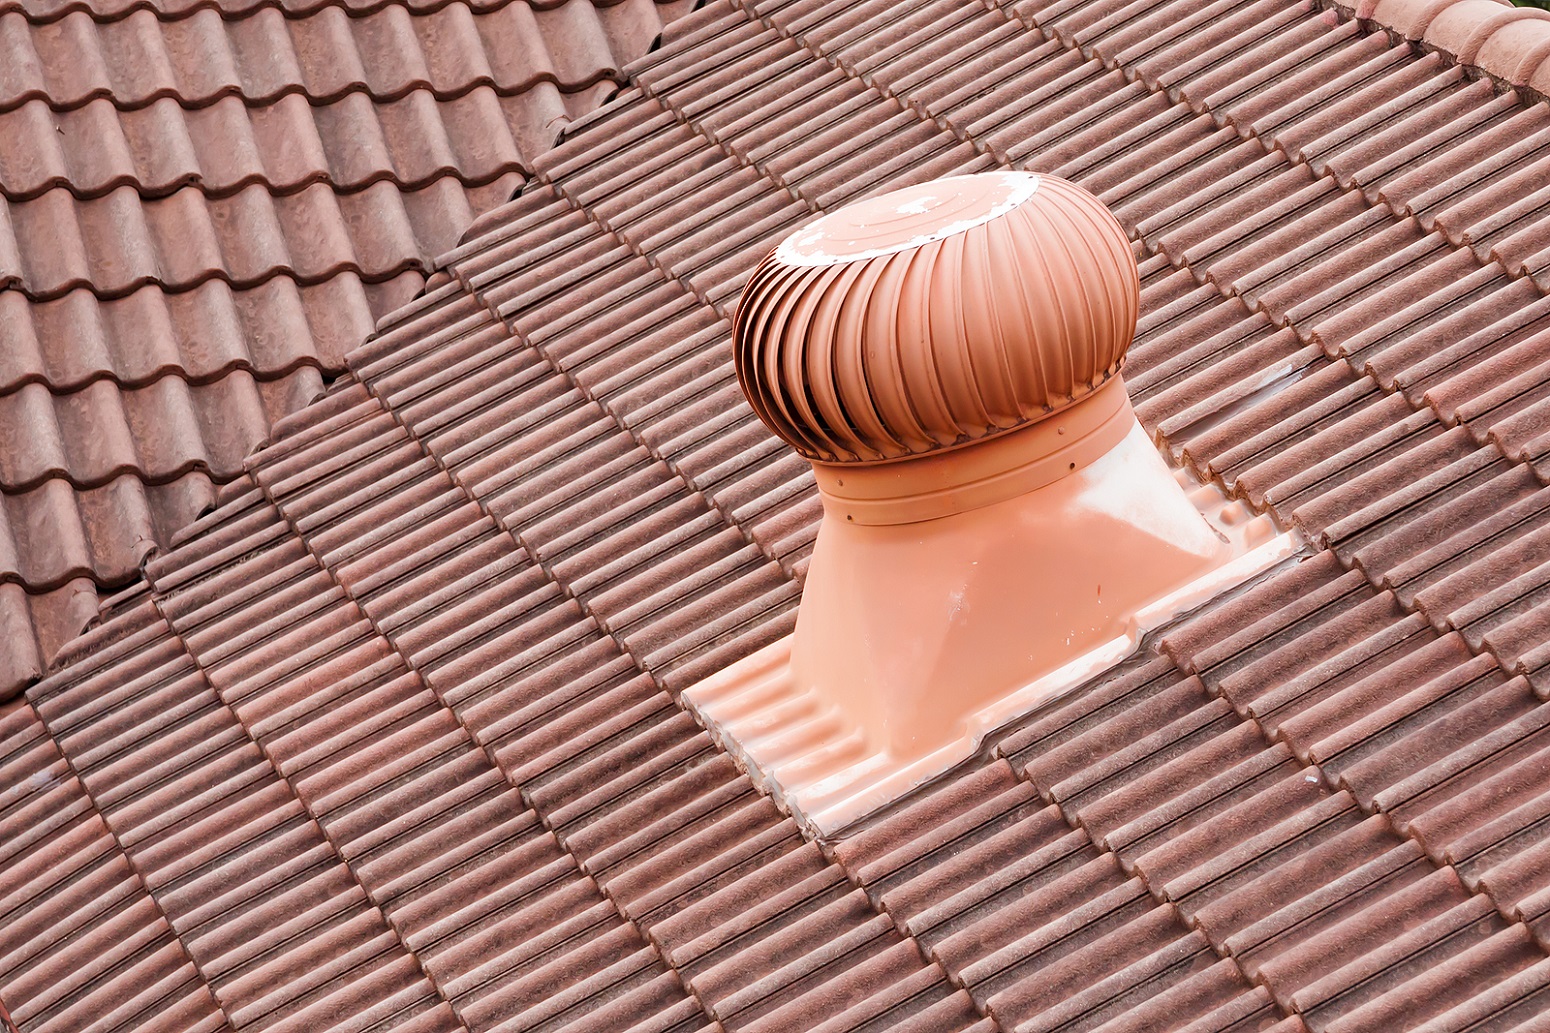 Roof Air Ventilator For Room Heat Control.